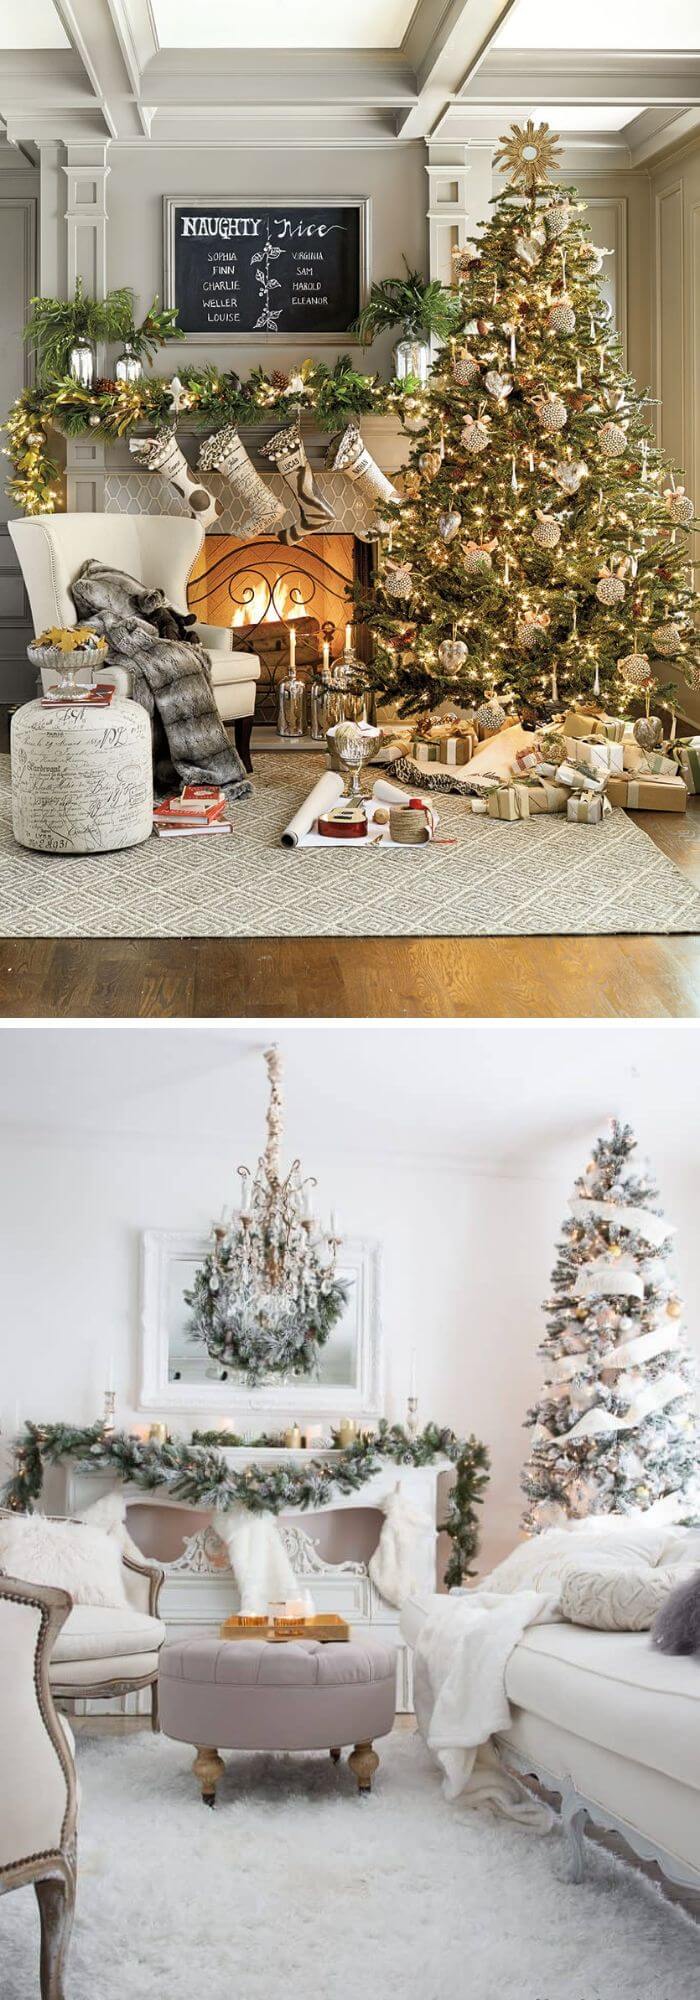 20 christmas living room ideas